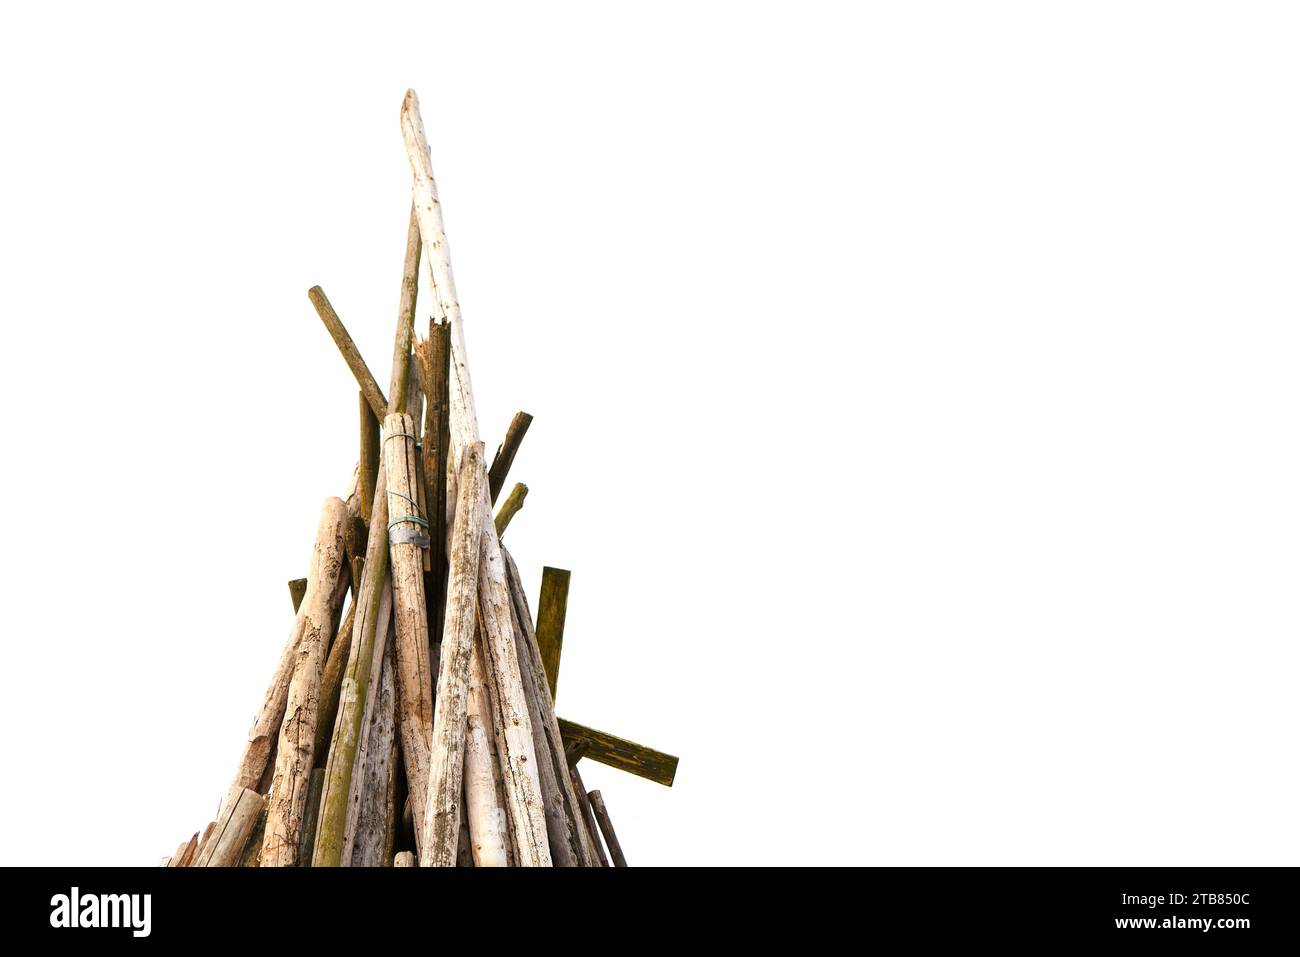 Many wood sticks piled together as tepee construction isolated on white background Stock Photo